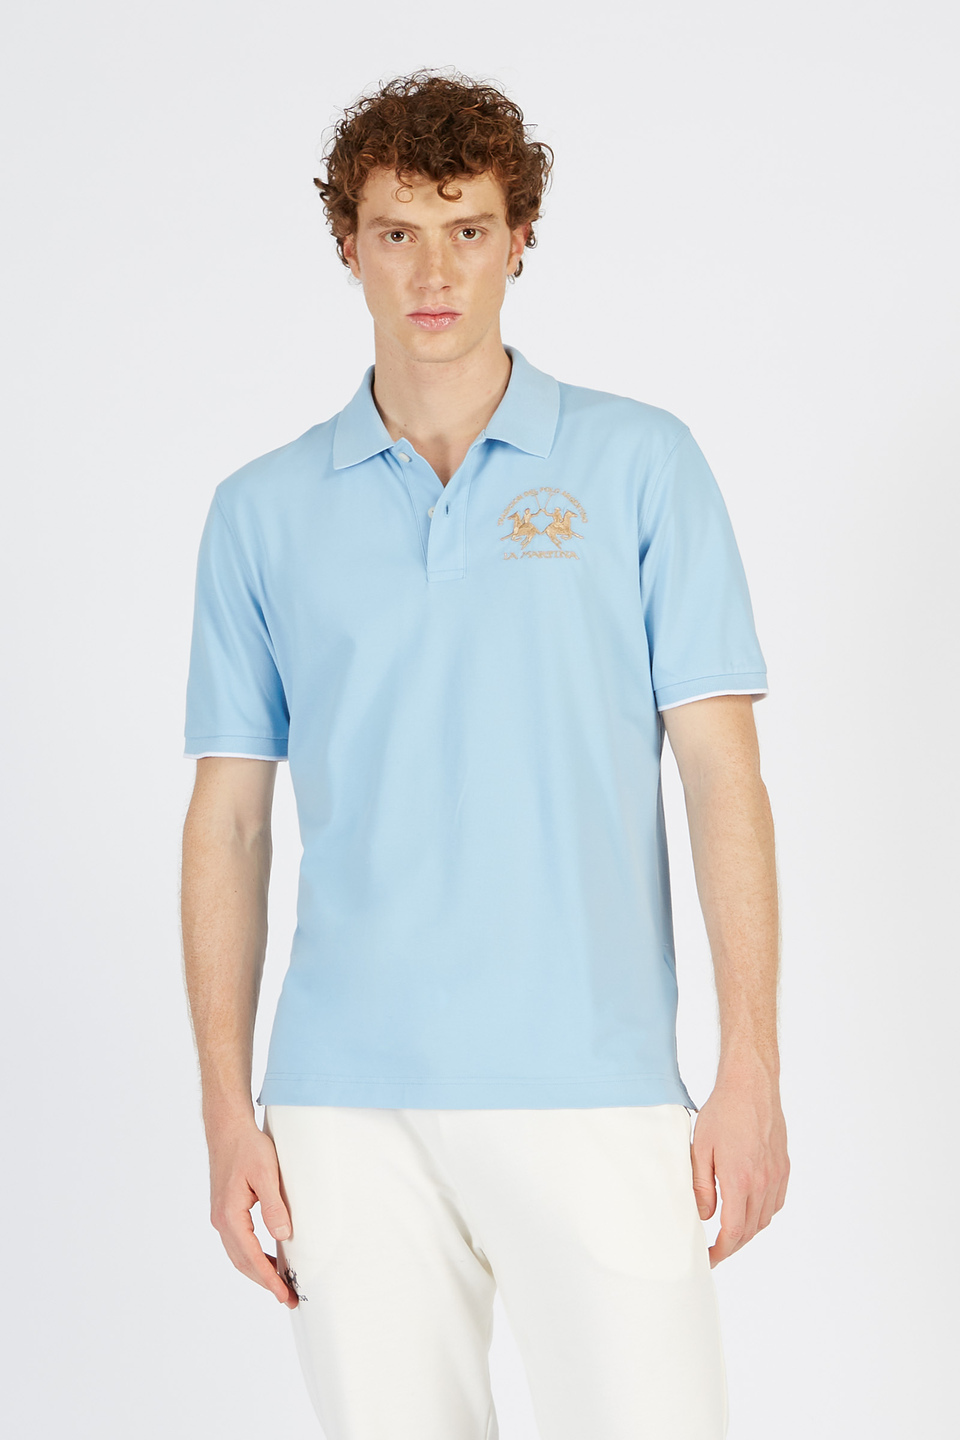 Men's polo shirt in a regular fit - Miguel | La Martina - Official Online Shop